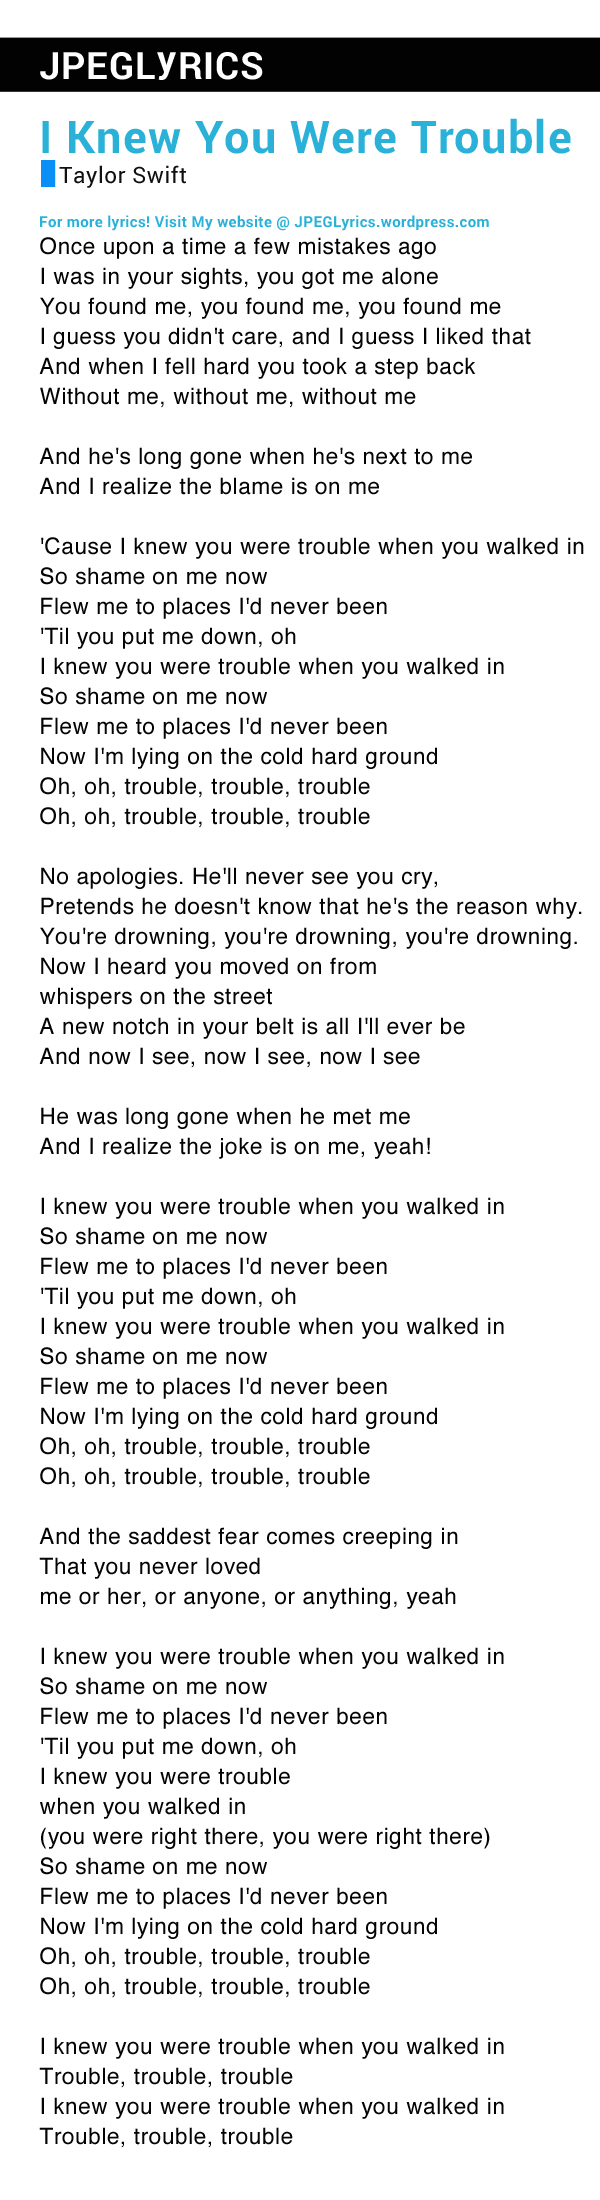 Taylor Swift - I Knew You Were Trouble Lyrics, Taylor Swift - I Knew You  Were Trouble (Lyrics), By Music evolution